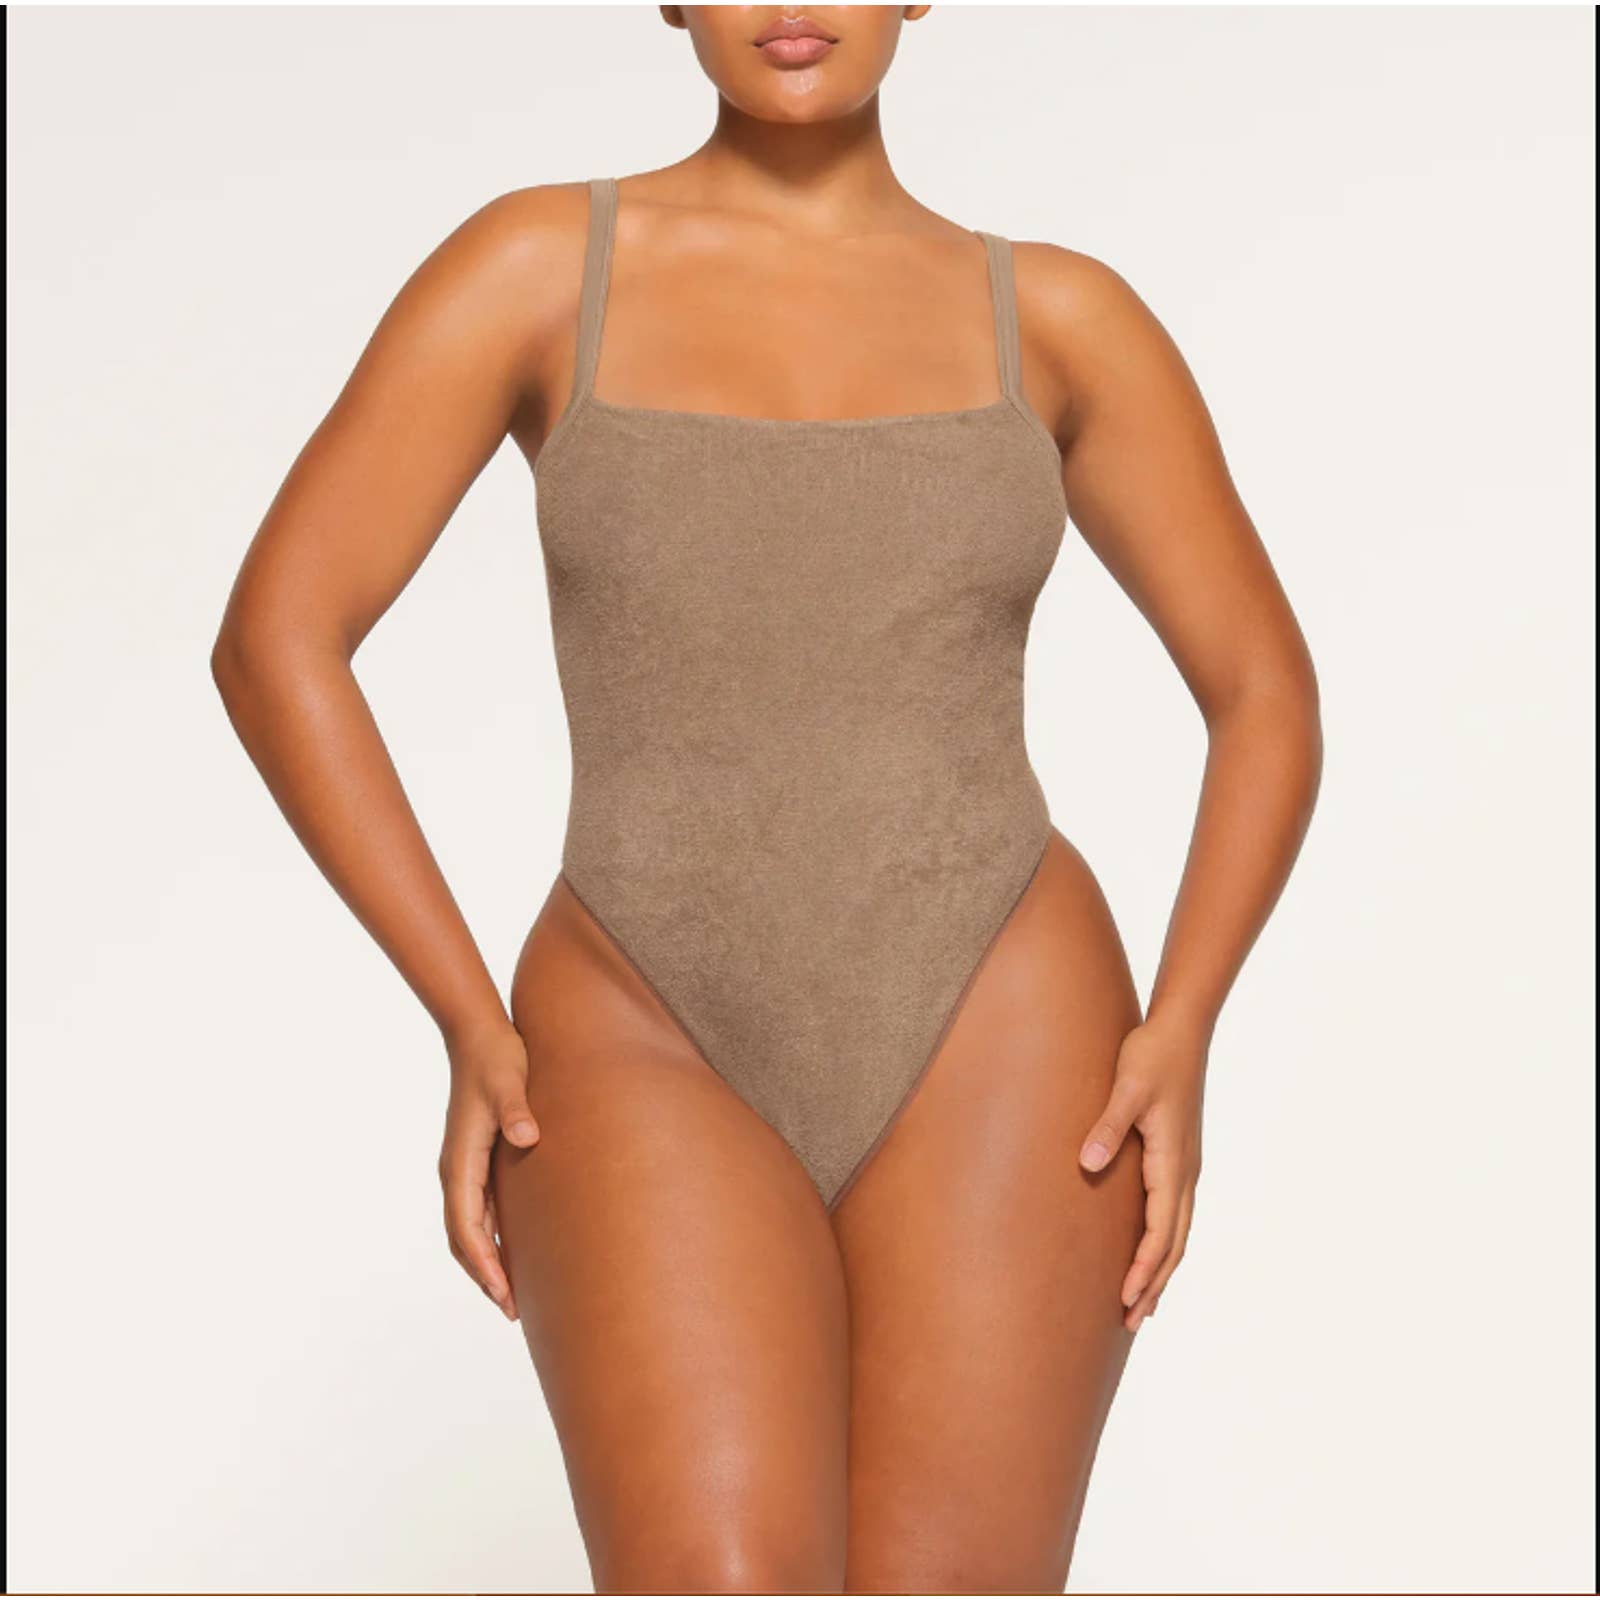 Womens Skims brown Sculpting Bodysuit